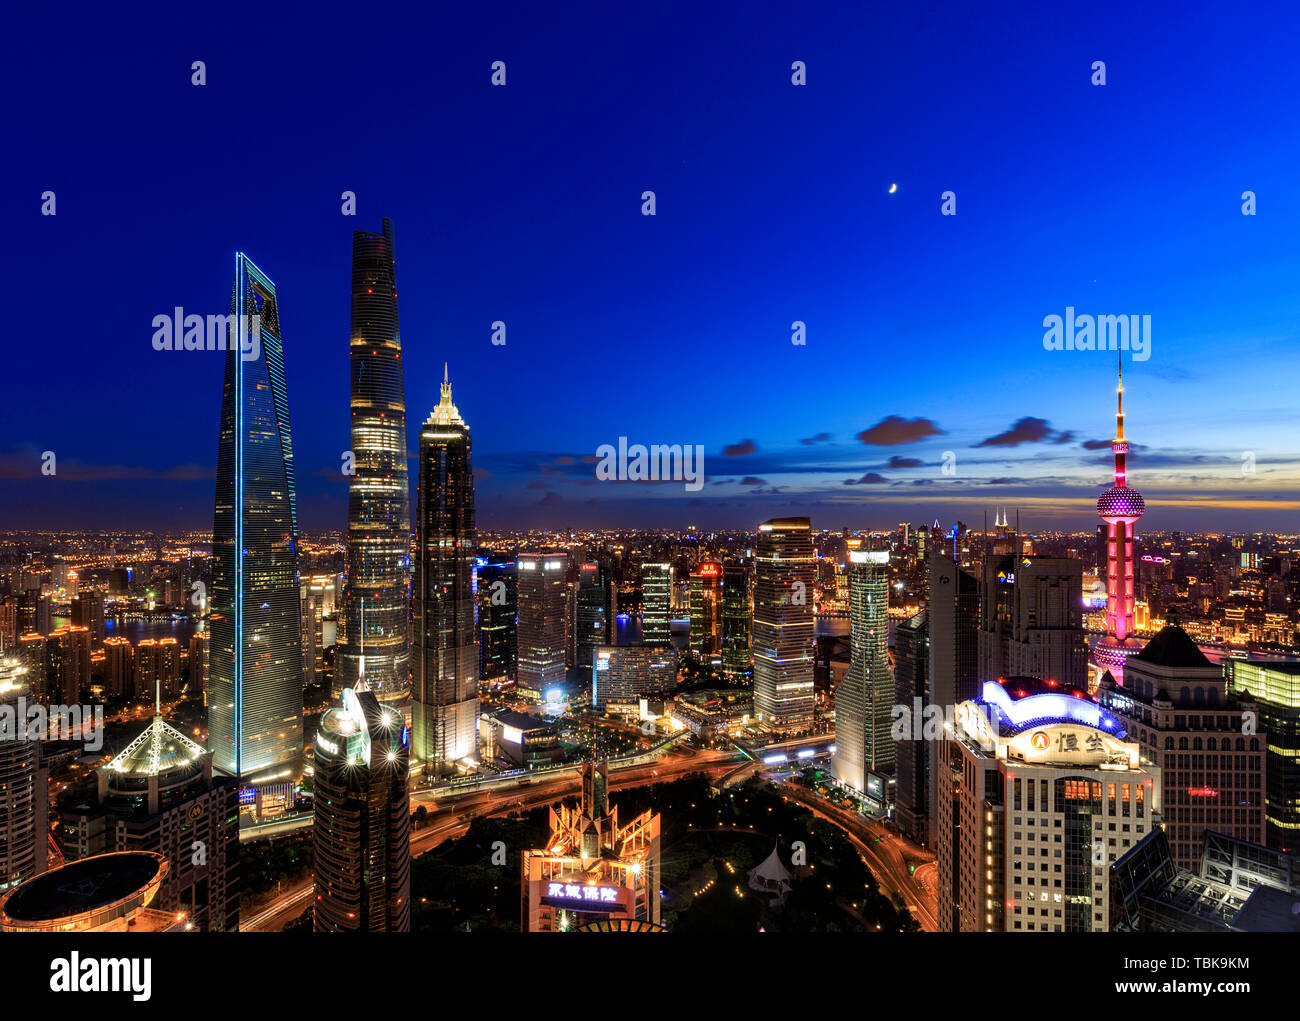 Night view of Lujiazui, Shanghai Stock Photo